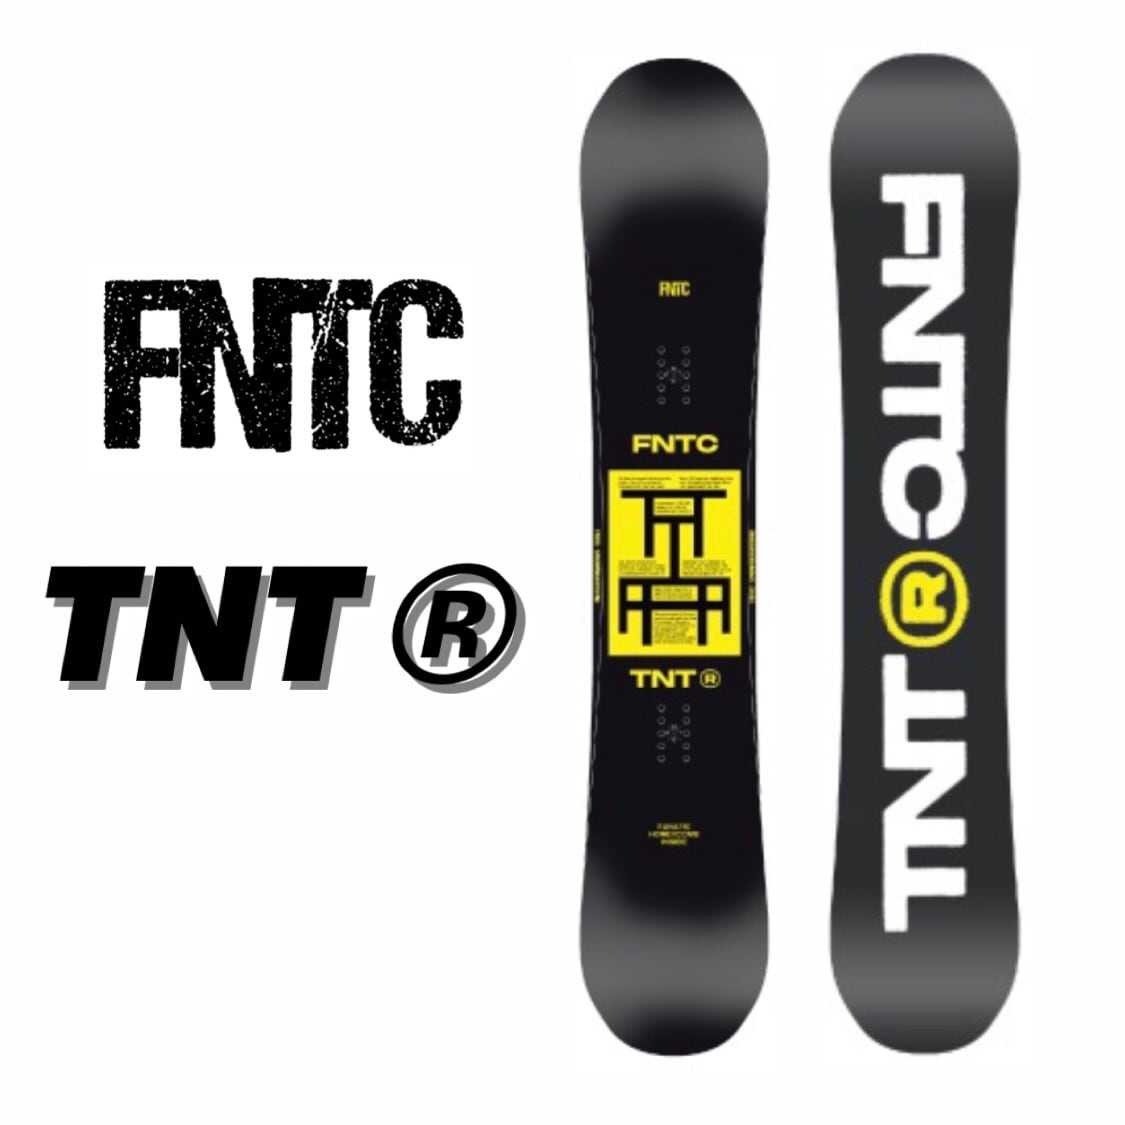 FNTC TNT